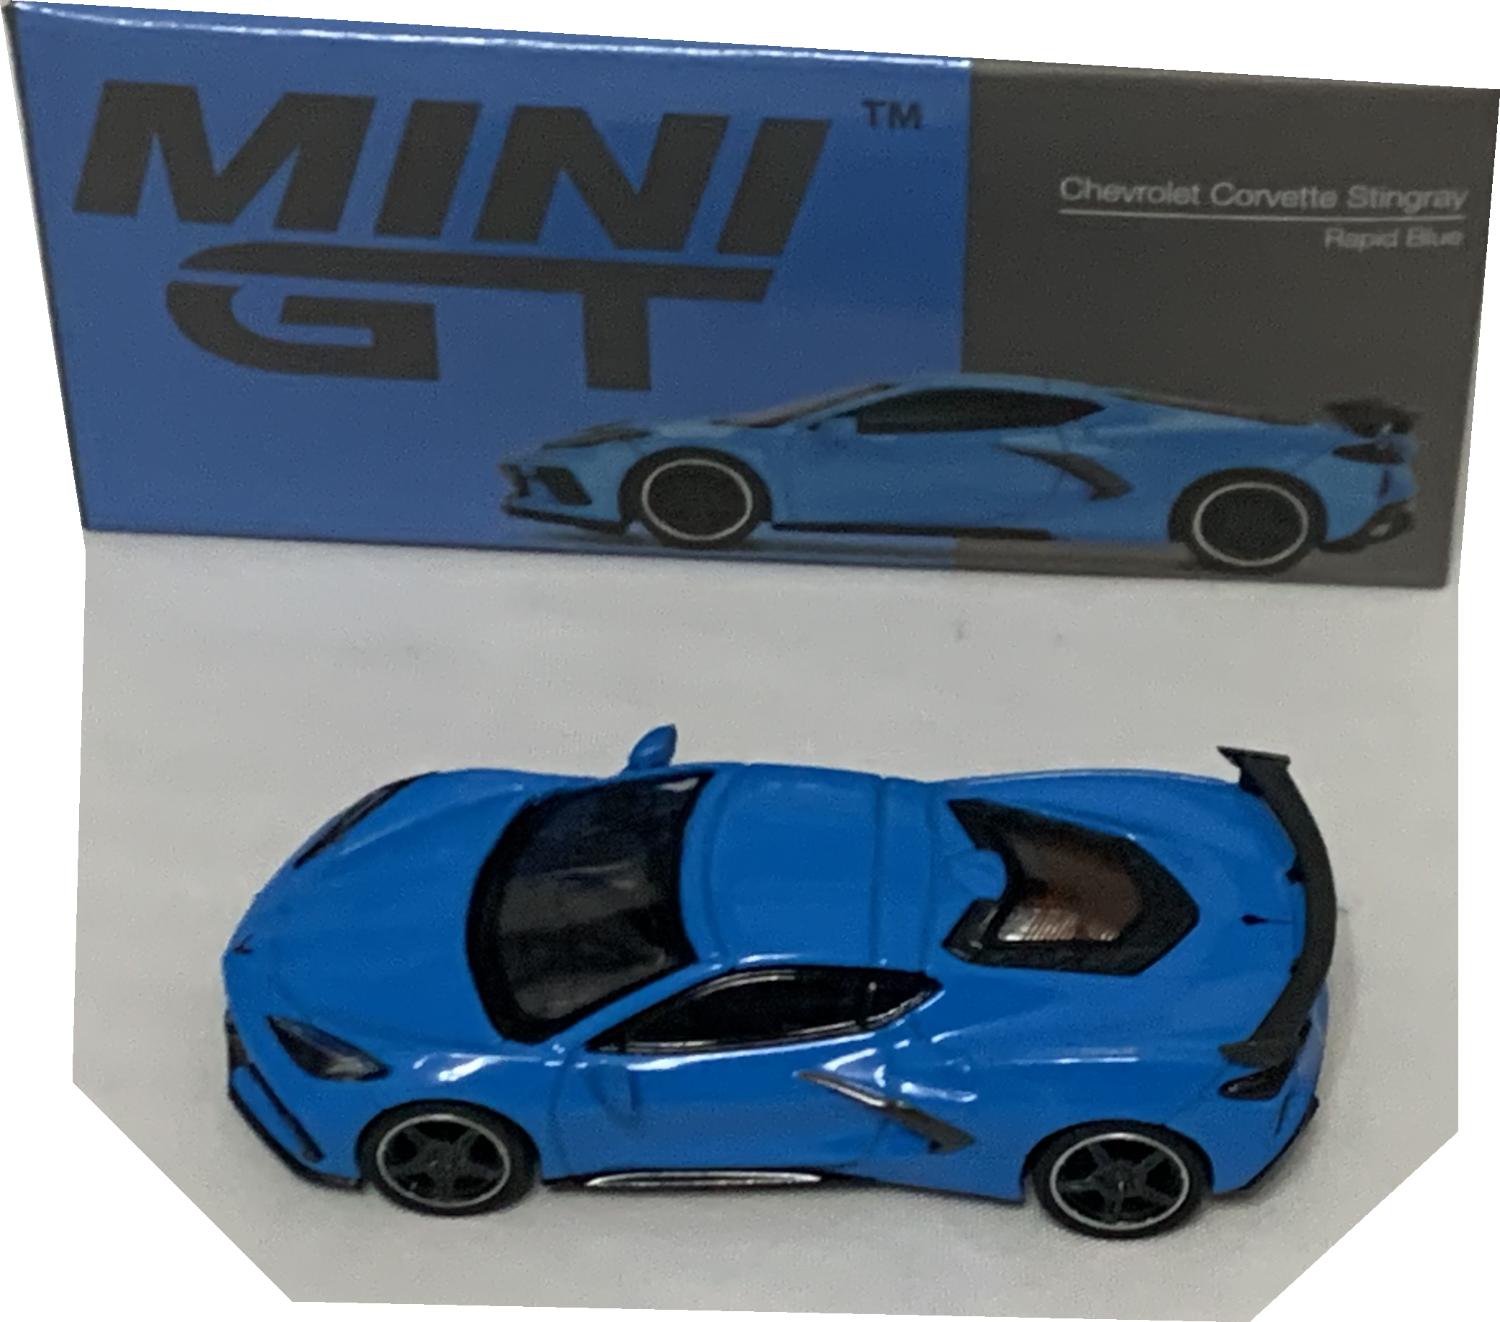 Chevrolet Corvette Stingray in rapid blue 1:64 scale model from Mini GT